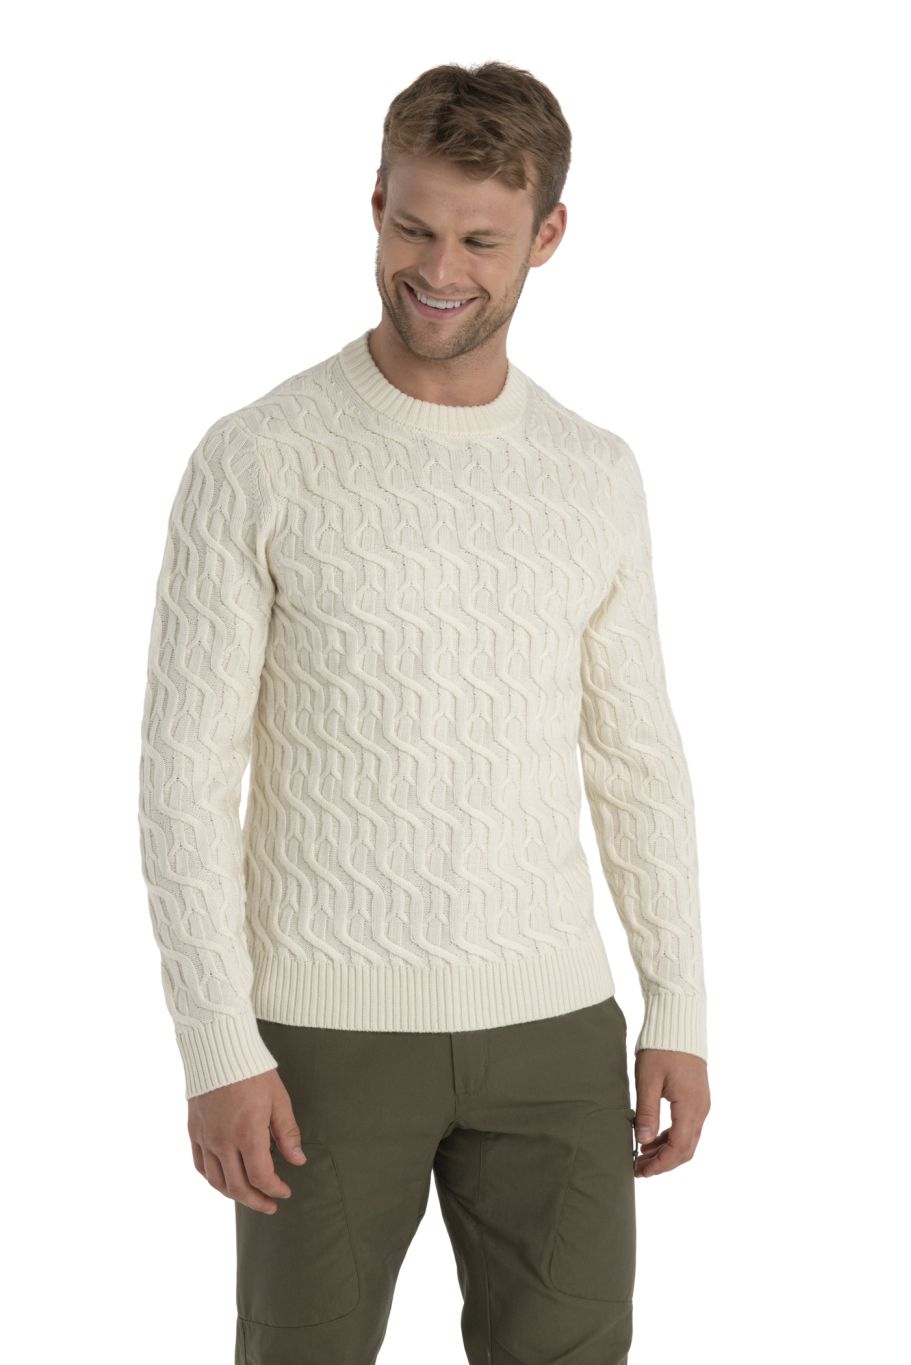 Pánský merino svetr ICEBREAKER Mens Merino Cable Knit Crewe Sweater, Undyed velikost: S